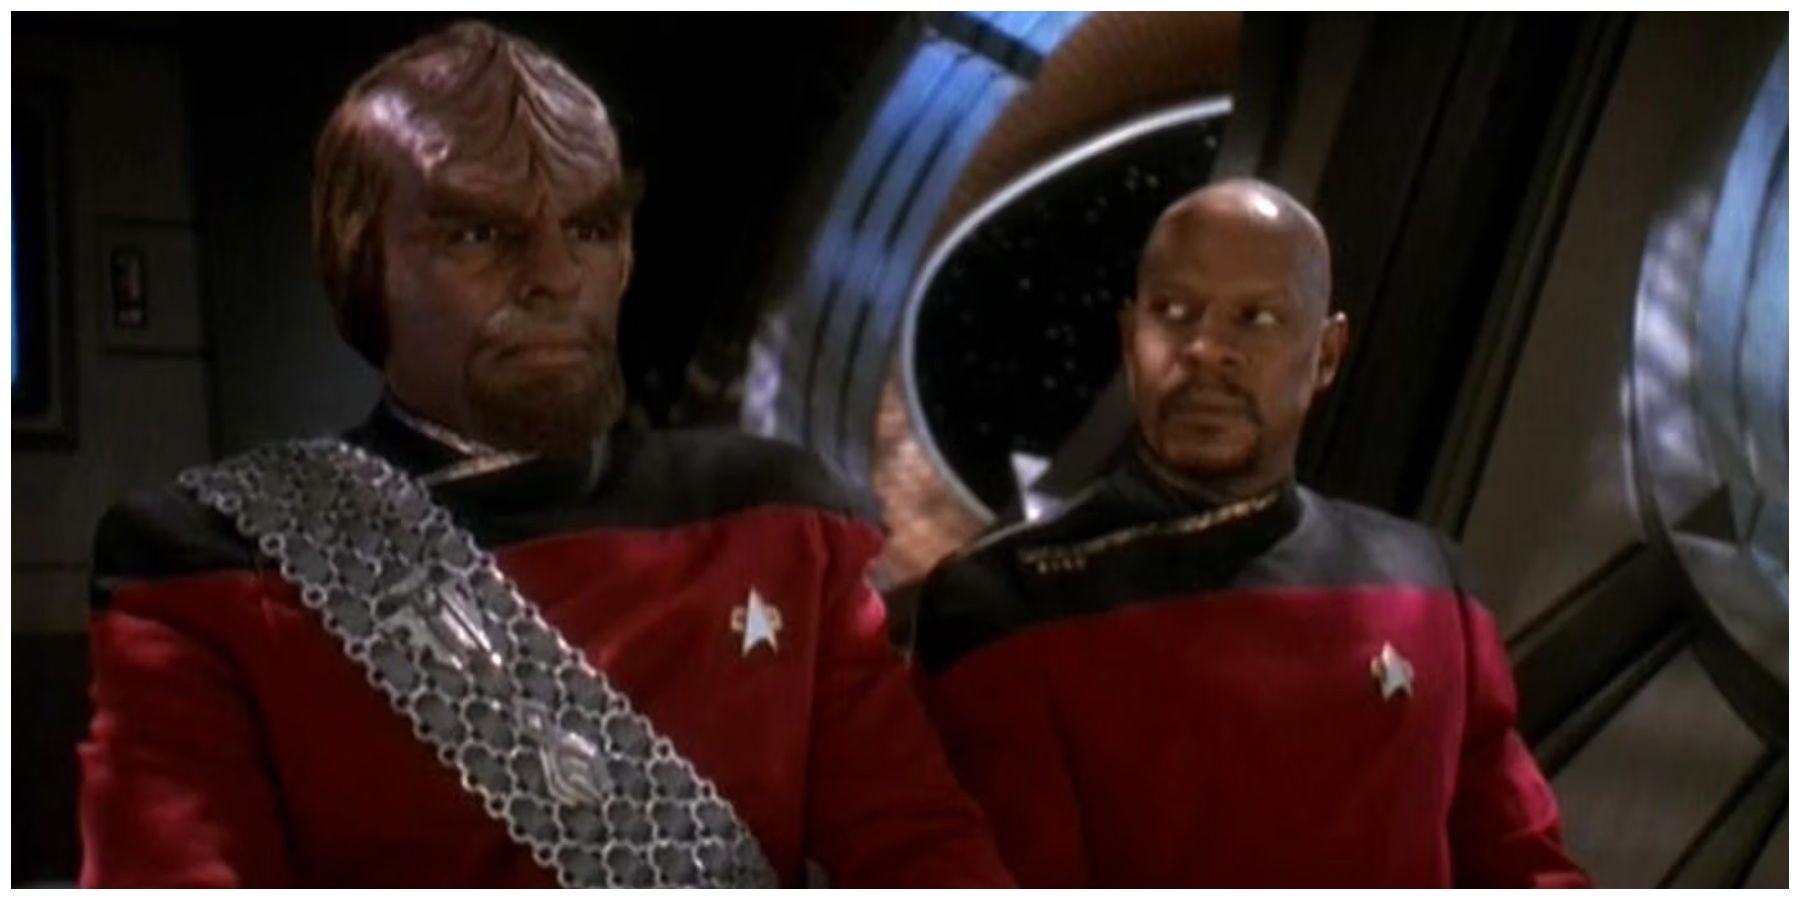 Michael Dorn as Worf. Avery Brooks as Capt. Sisko.